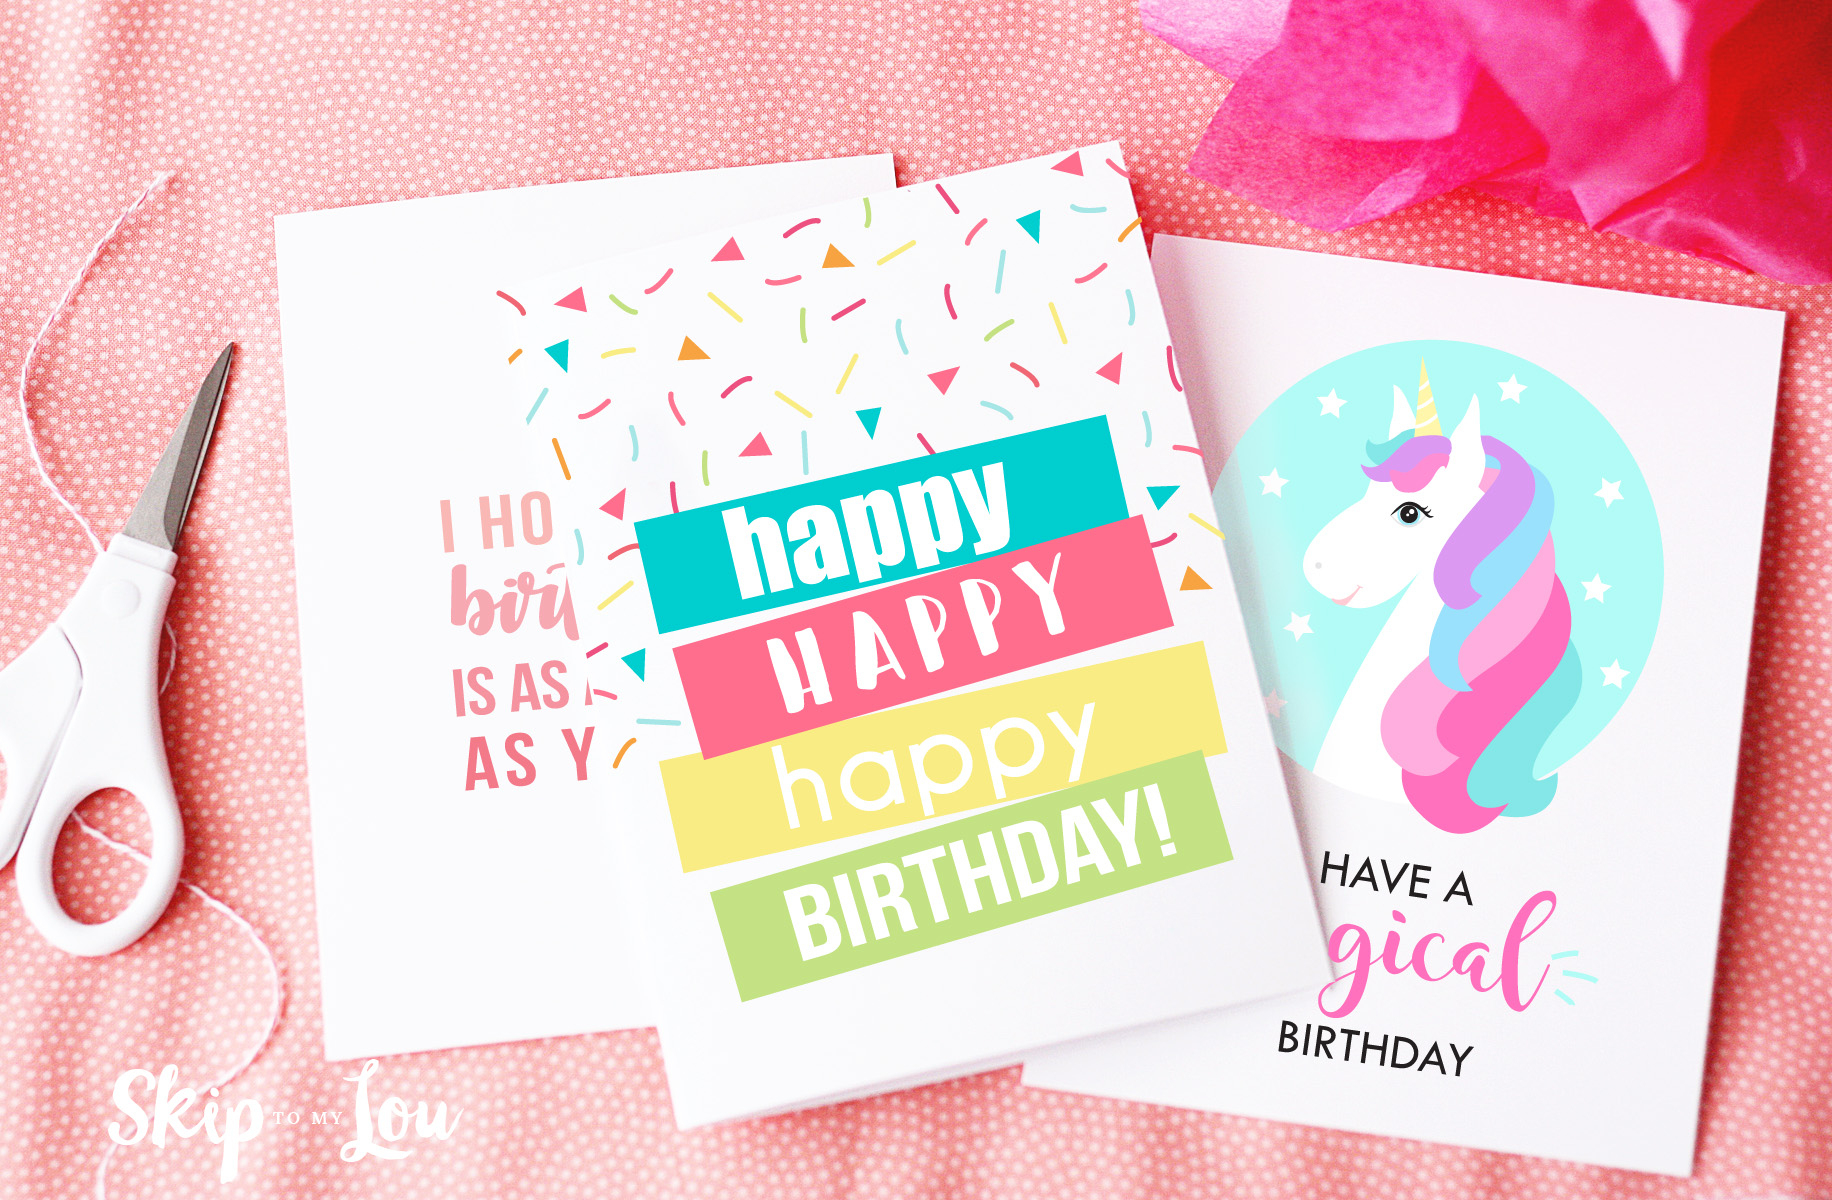 Free Printable Birthday Cards | Skip To My Lou - Free Printable Birthday Cards For Your Best Friend